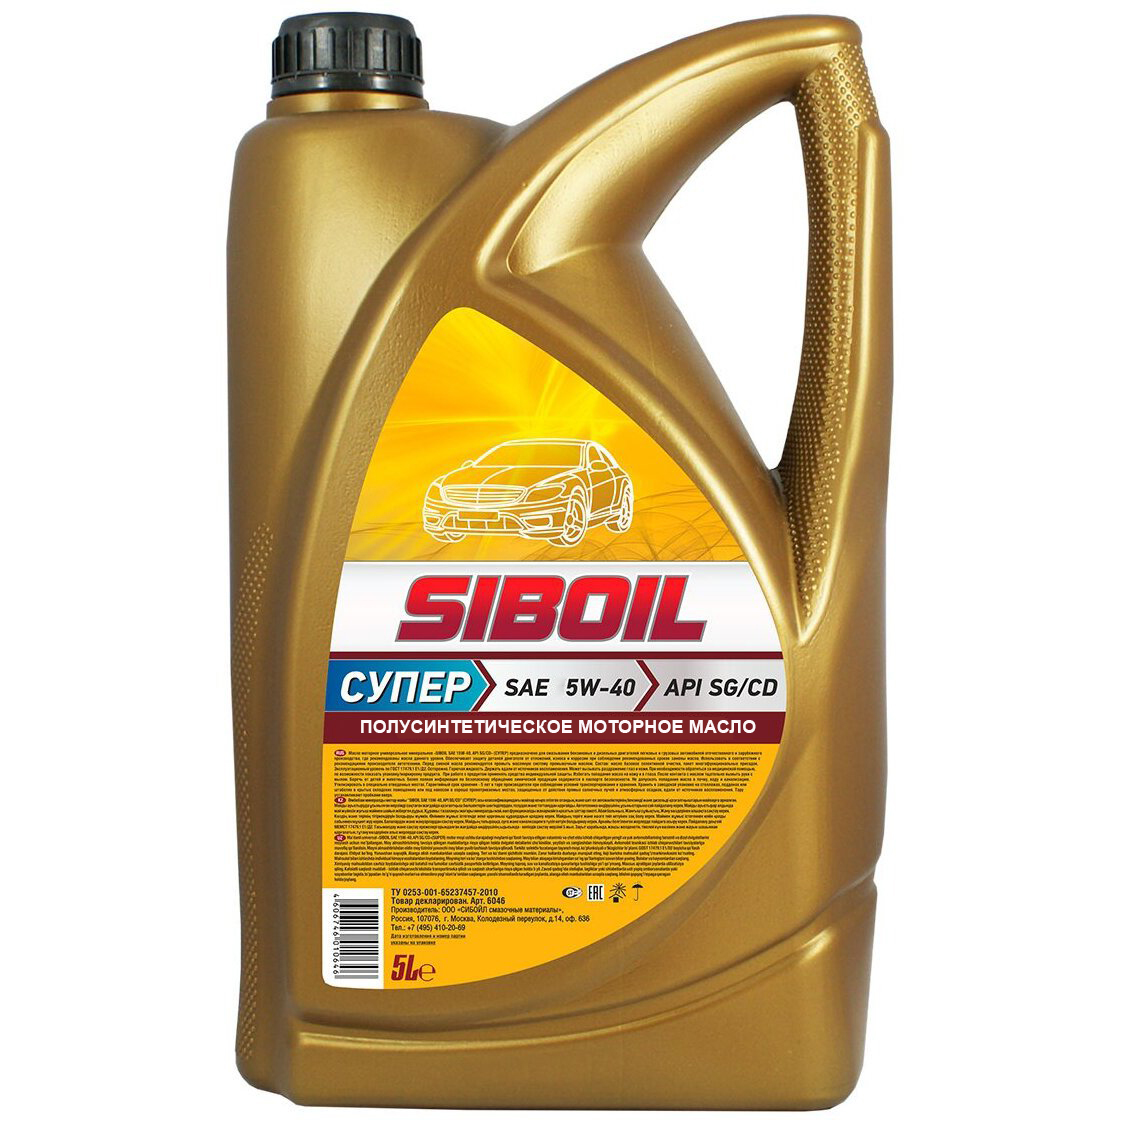 Масло моторное полусинтетическое «Siboil Супер» 5W40 API SG/CD, 4л.